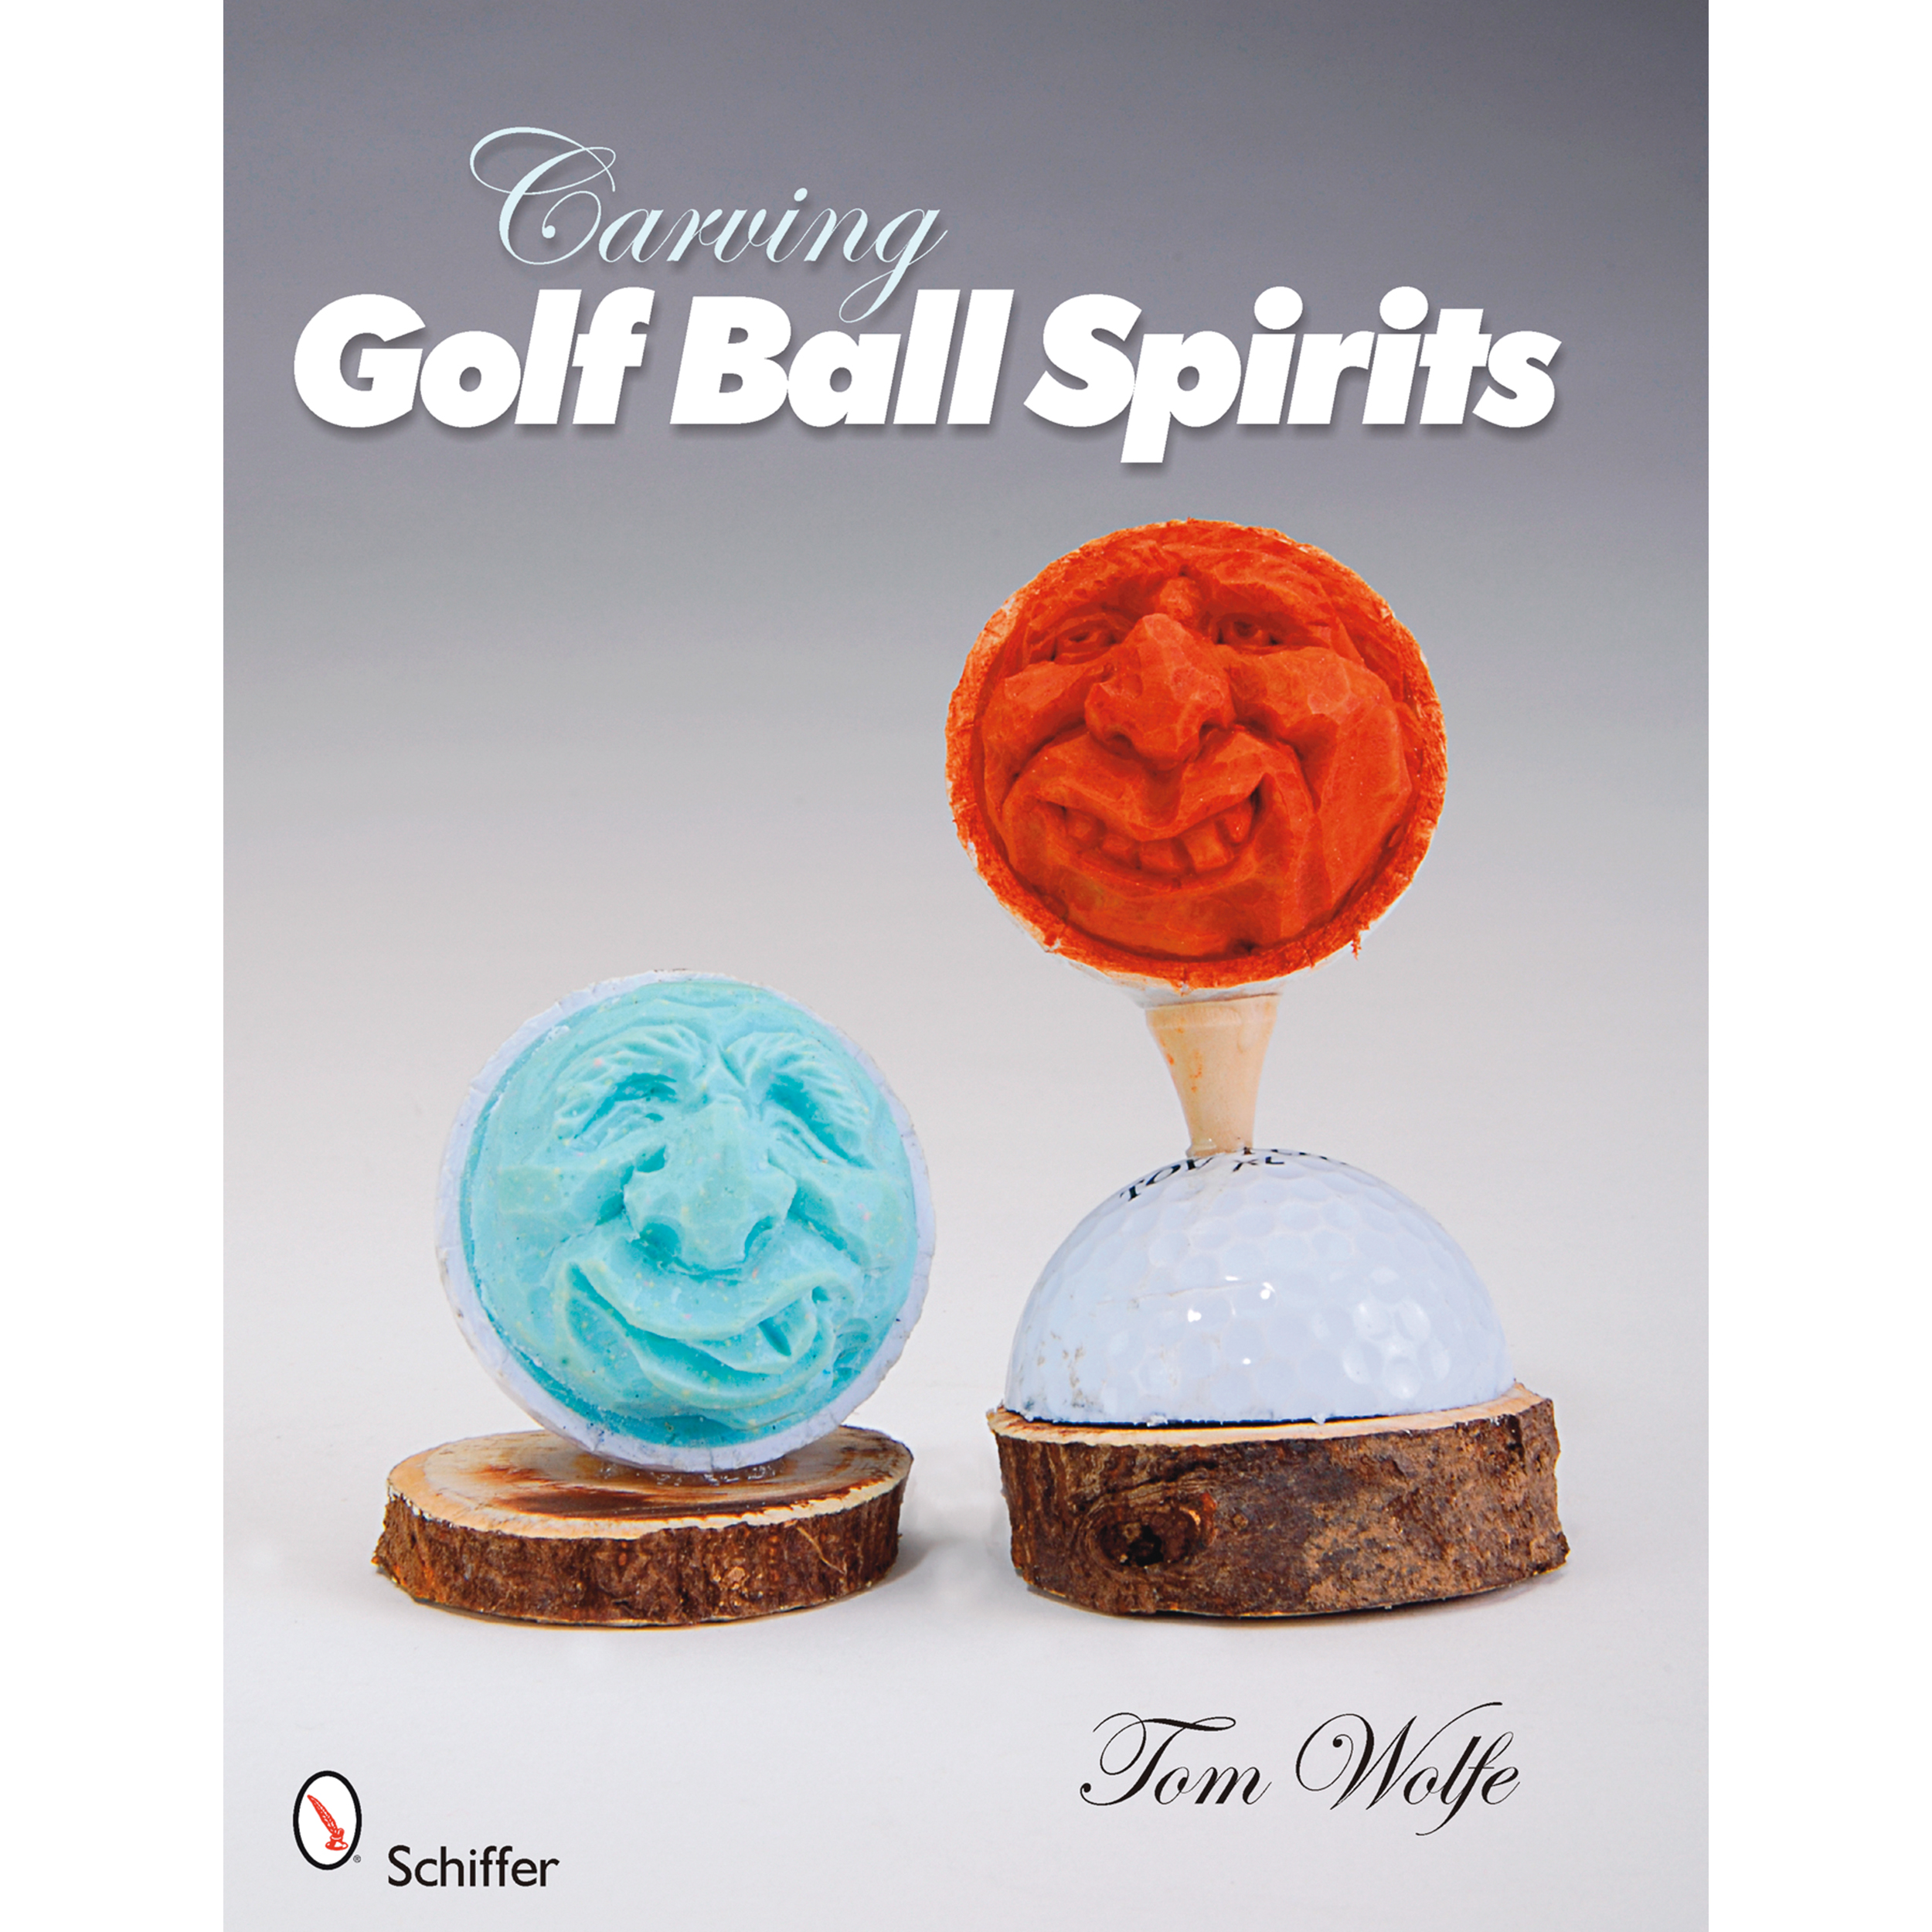 Carving Golf Ball Spirits